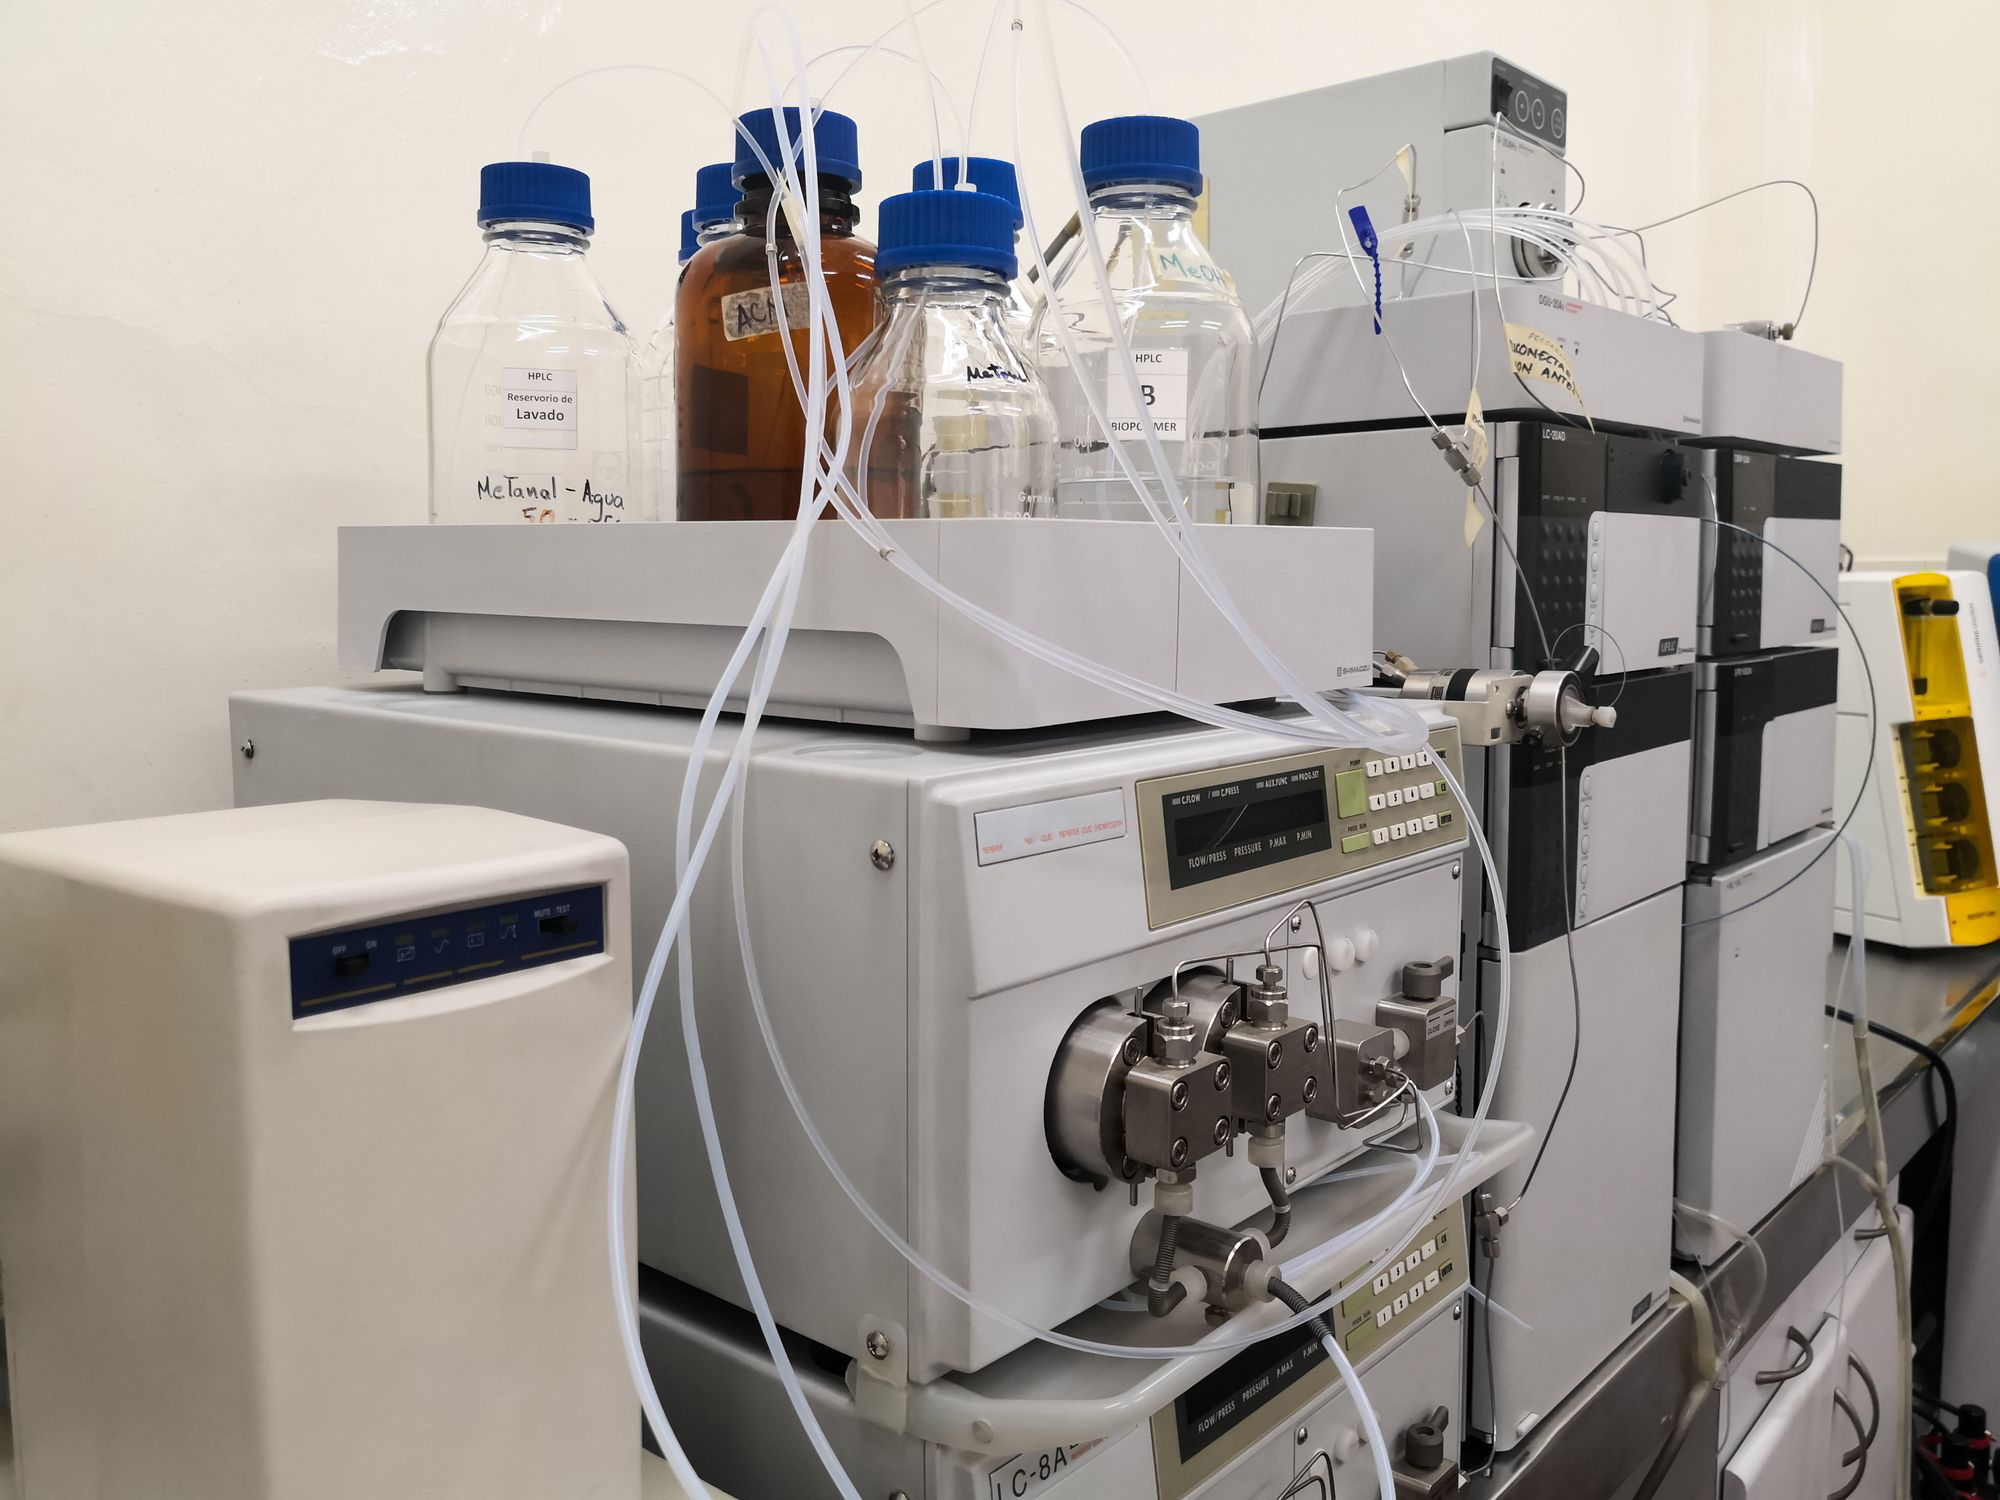 High-performance liquid chromatography equipment, HPLC, in a scientific laboratory | Image Credit: © DavidBautista - stock.adobe.com